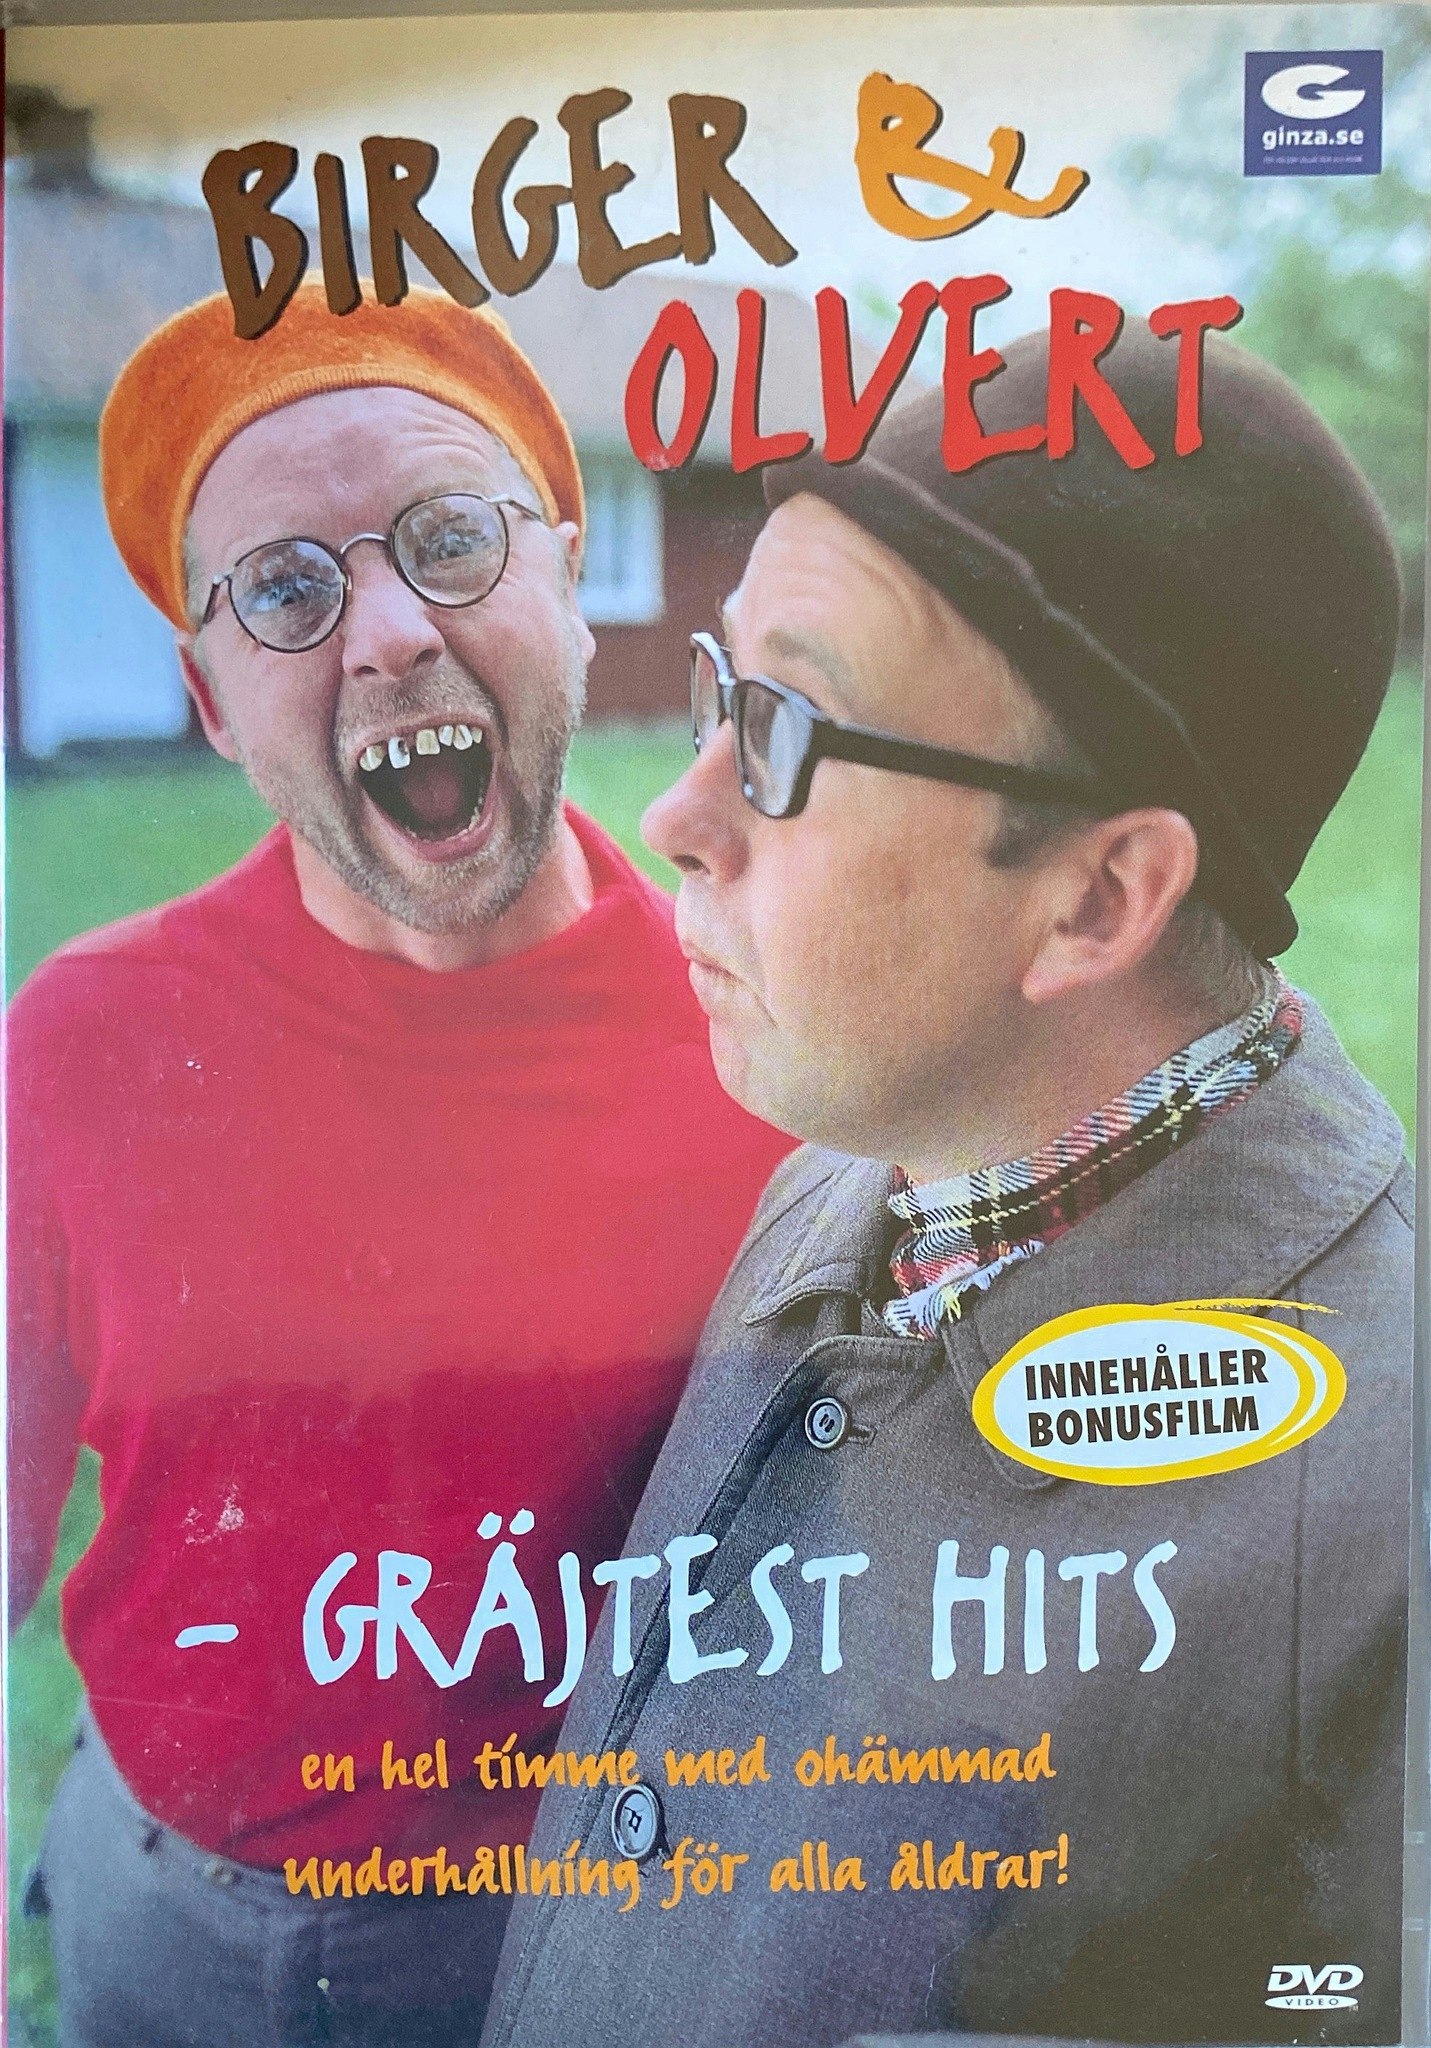 Birger Och Olvert Gräjtest Hits (Beg. DVD Slimcase Promo)